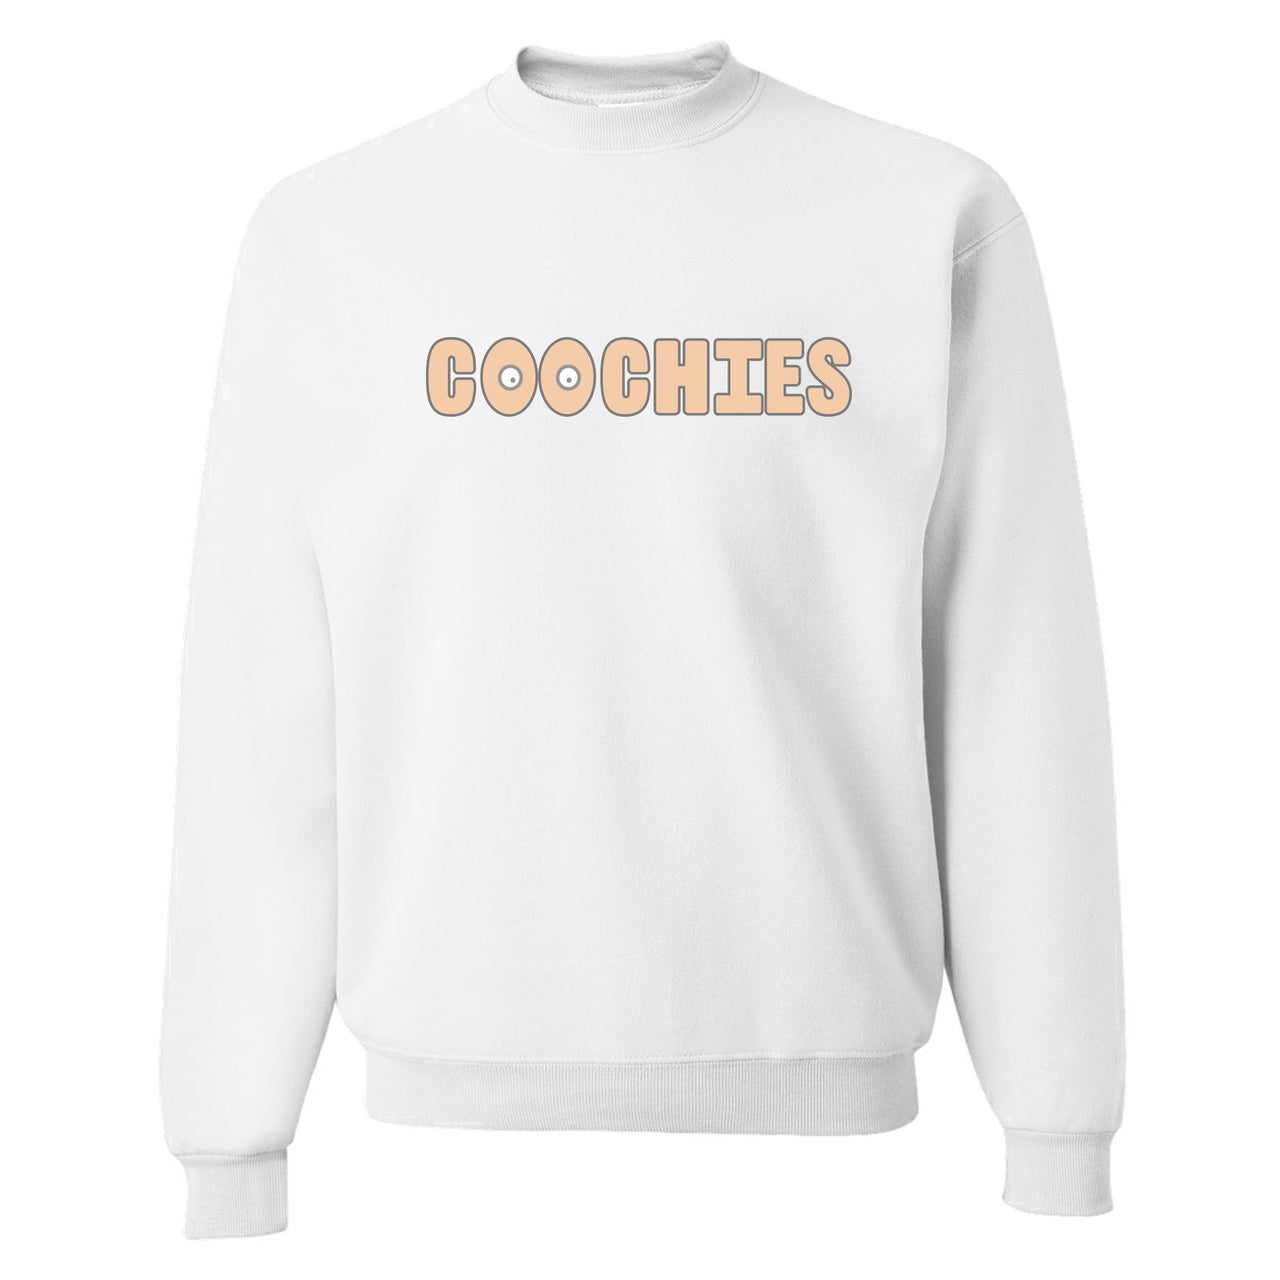 True Form v2 350s Crewneck Sweater | Coochies, White